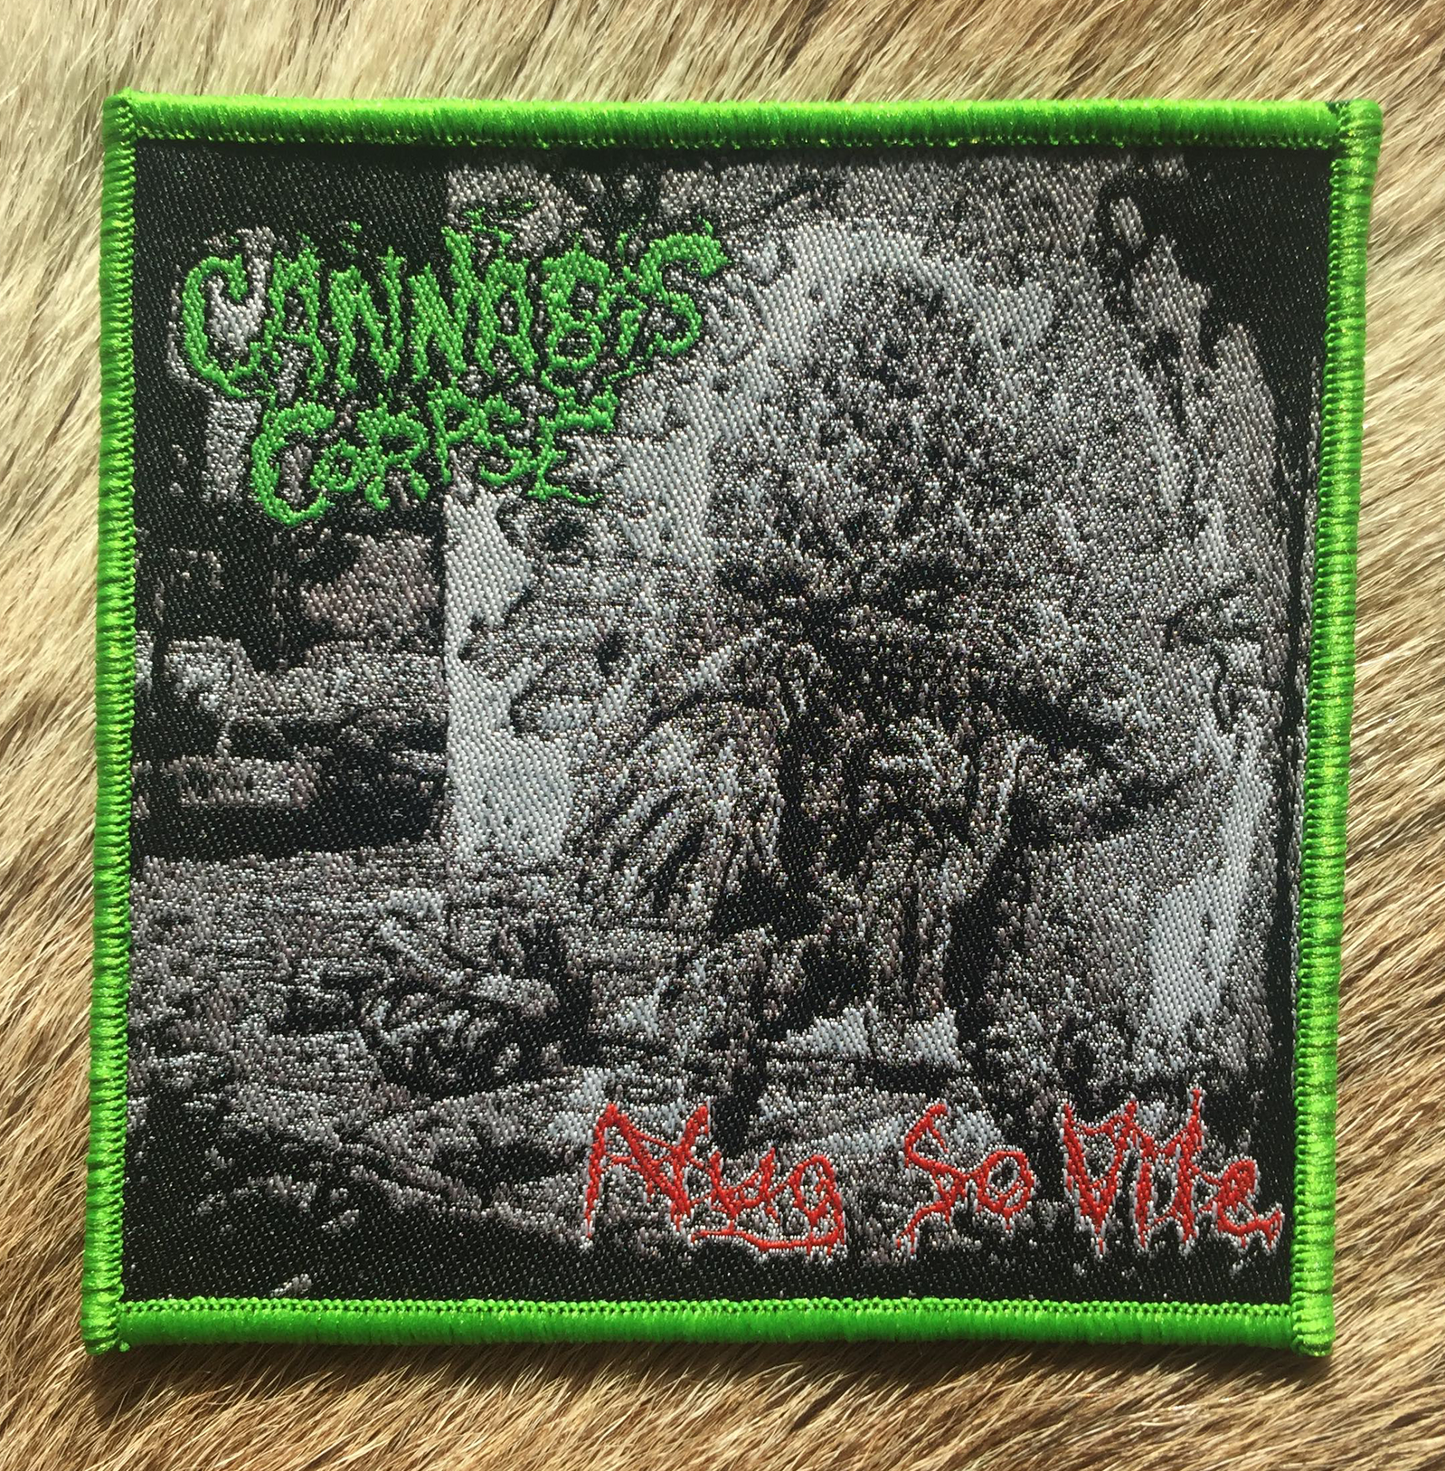 Cannabis Corpse - Nug So Vile  Patch